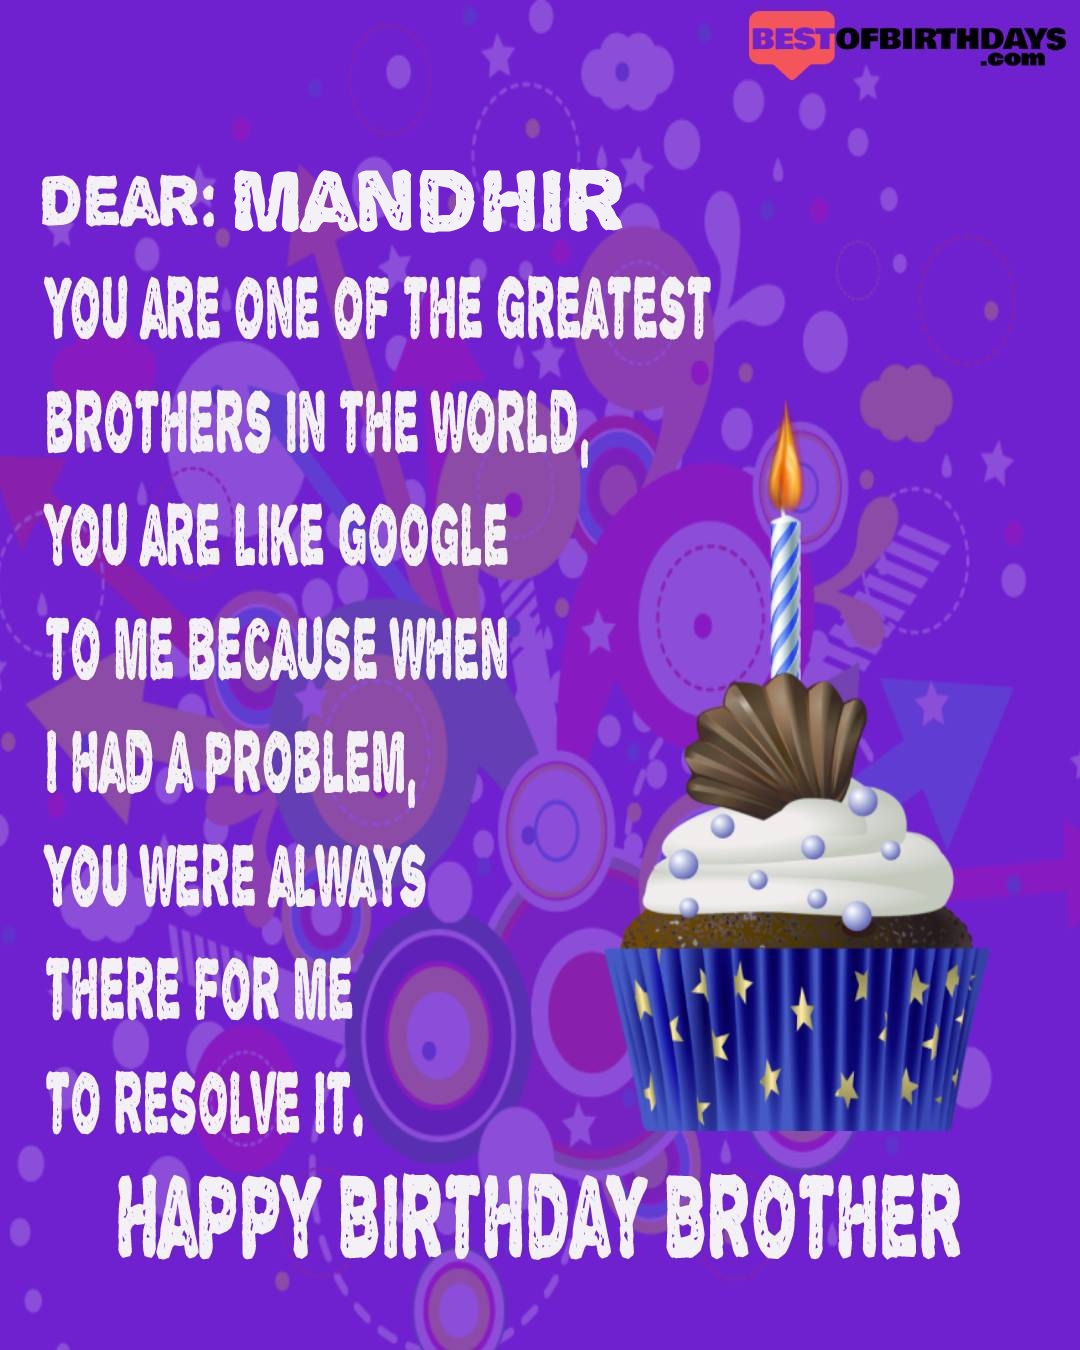 Happy birthday mandhir bhai brother bro